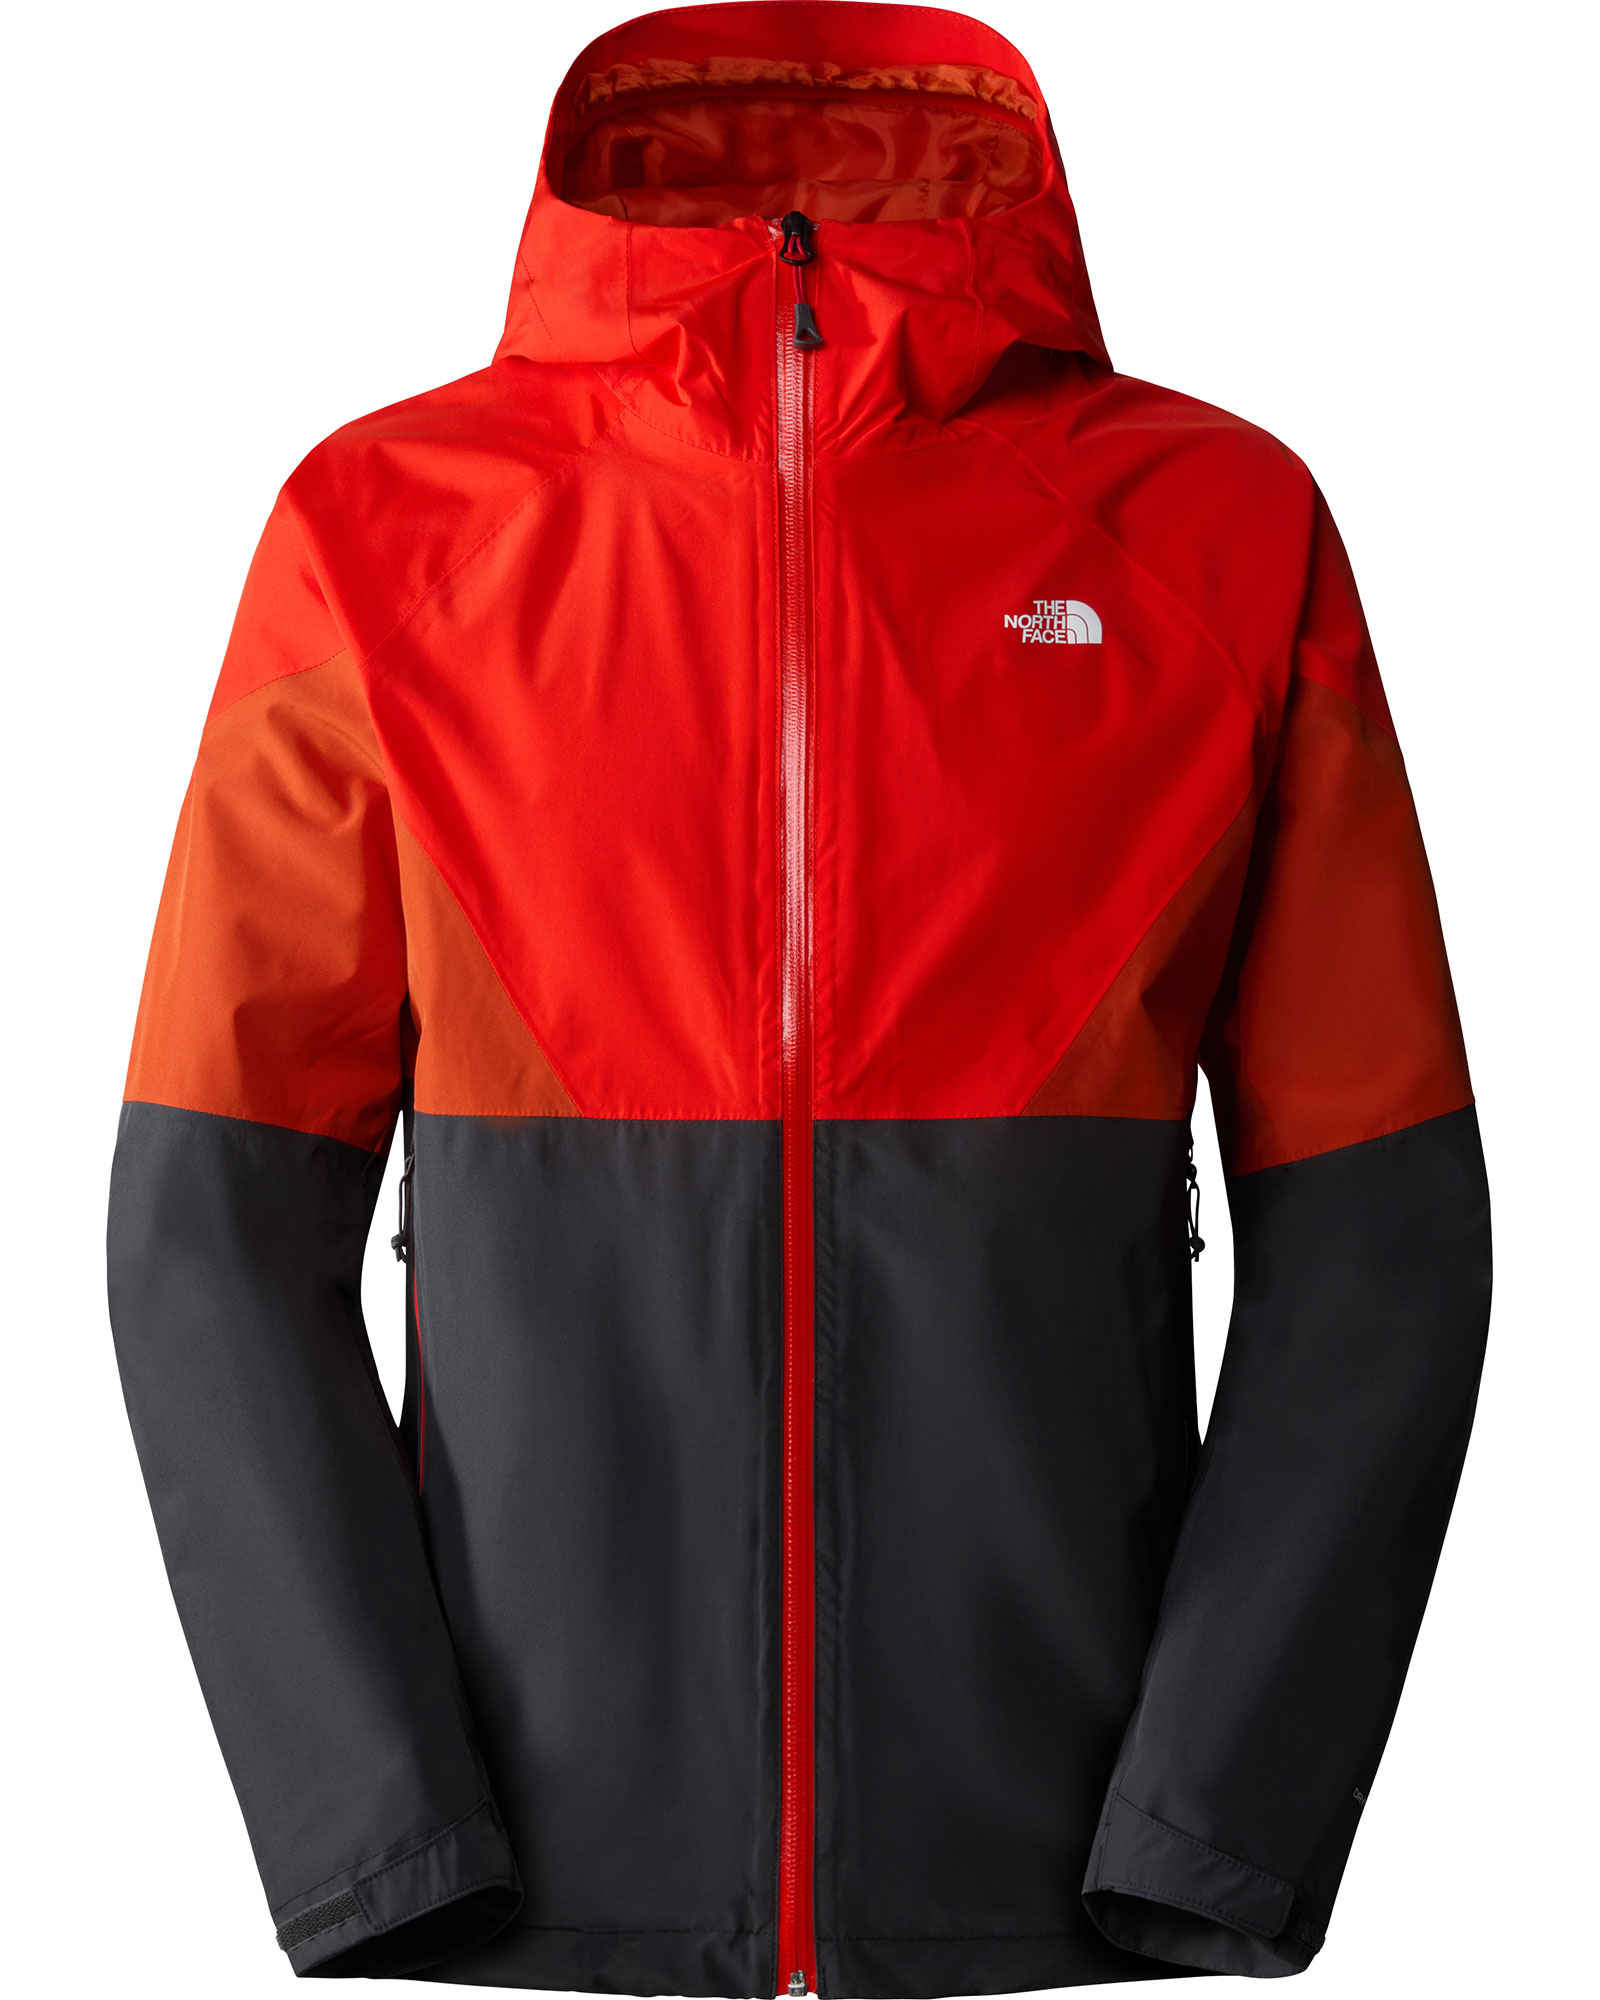 The North Face Lightning Men’s Jacket - Asphalt Grey/Fiery Red XL